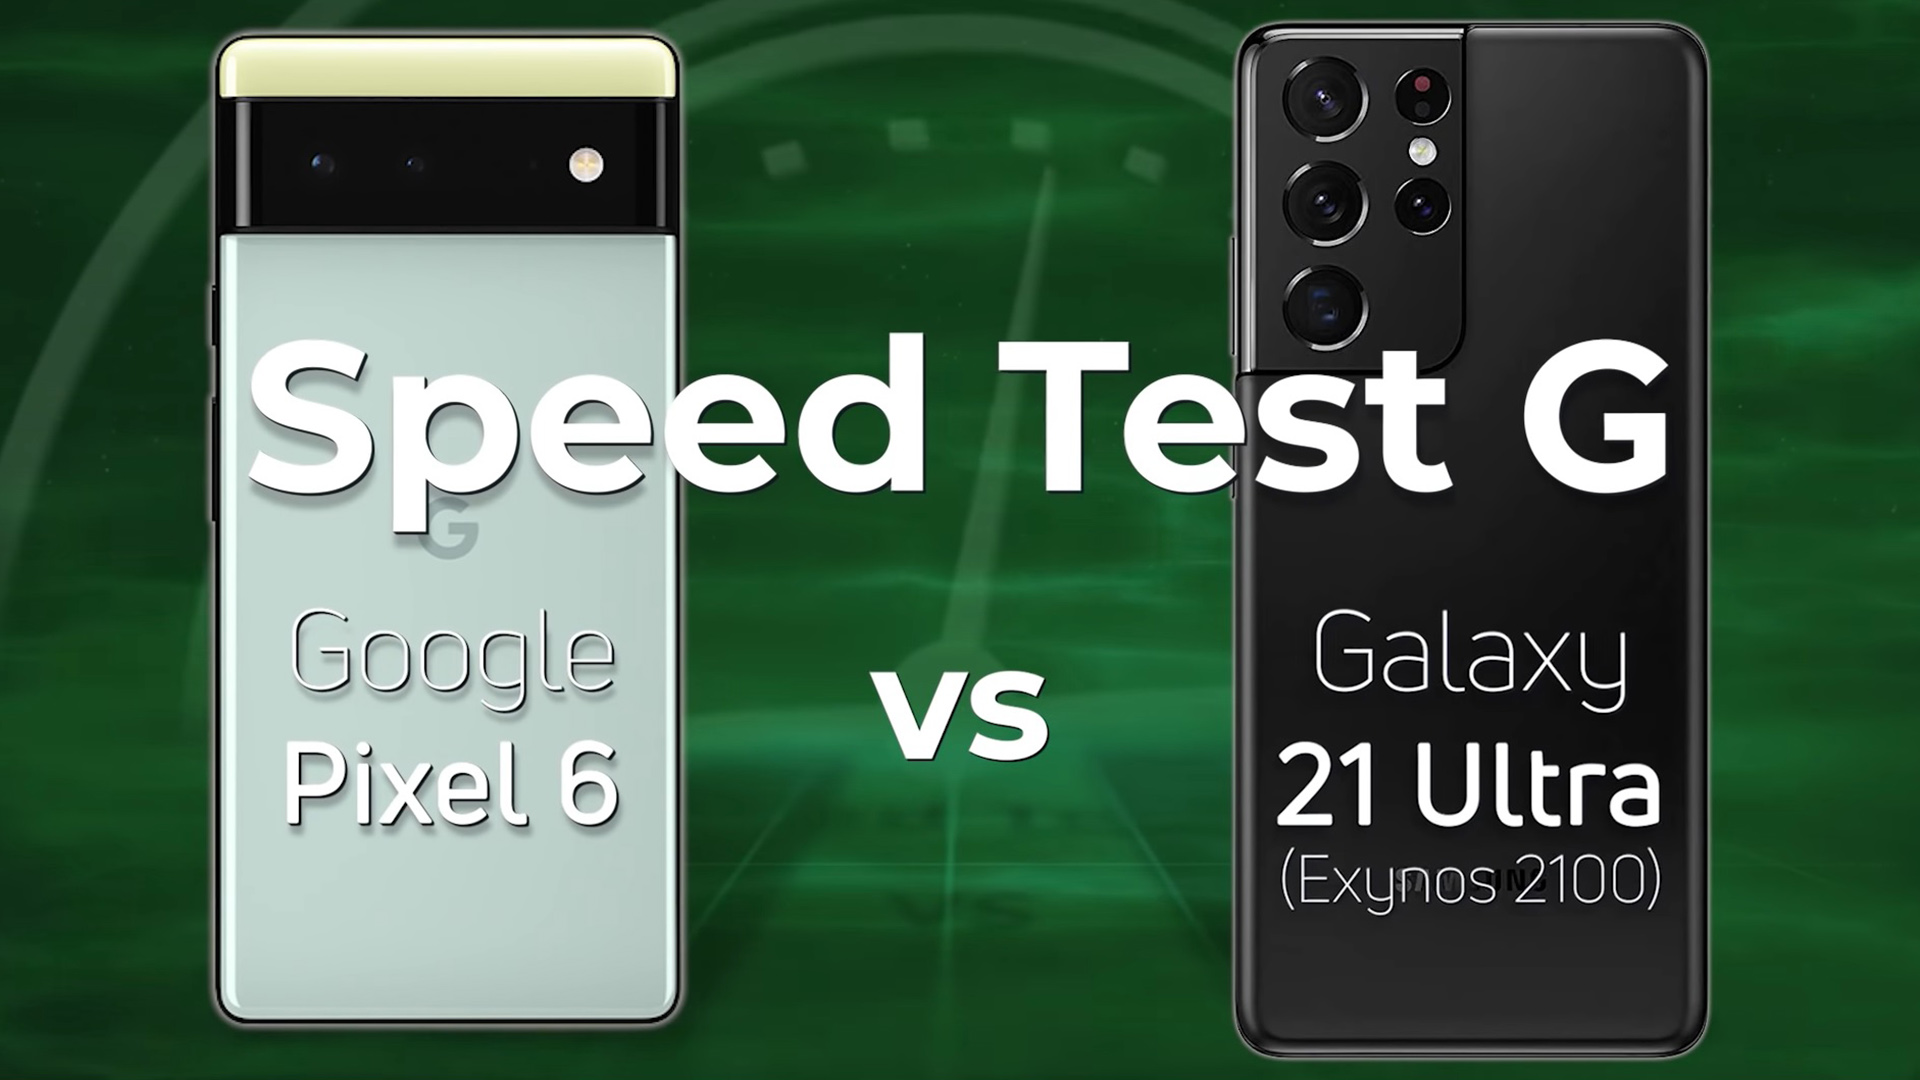 Google Pixel 6 vs Samsung Galaxy S21 Ultra 1